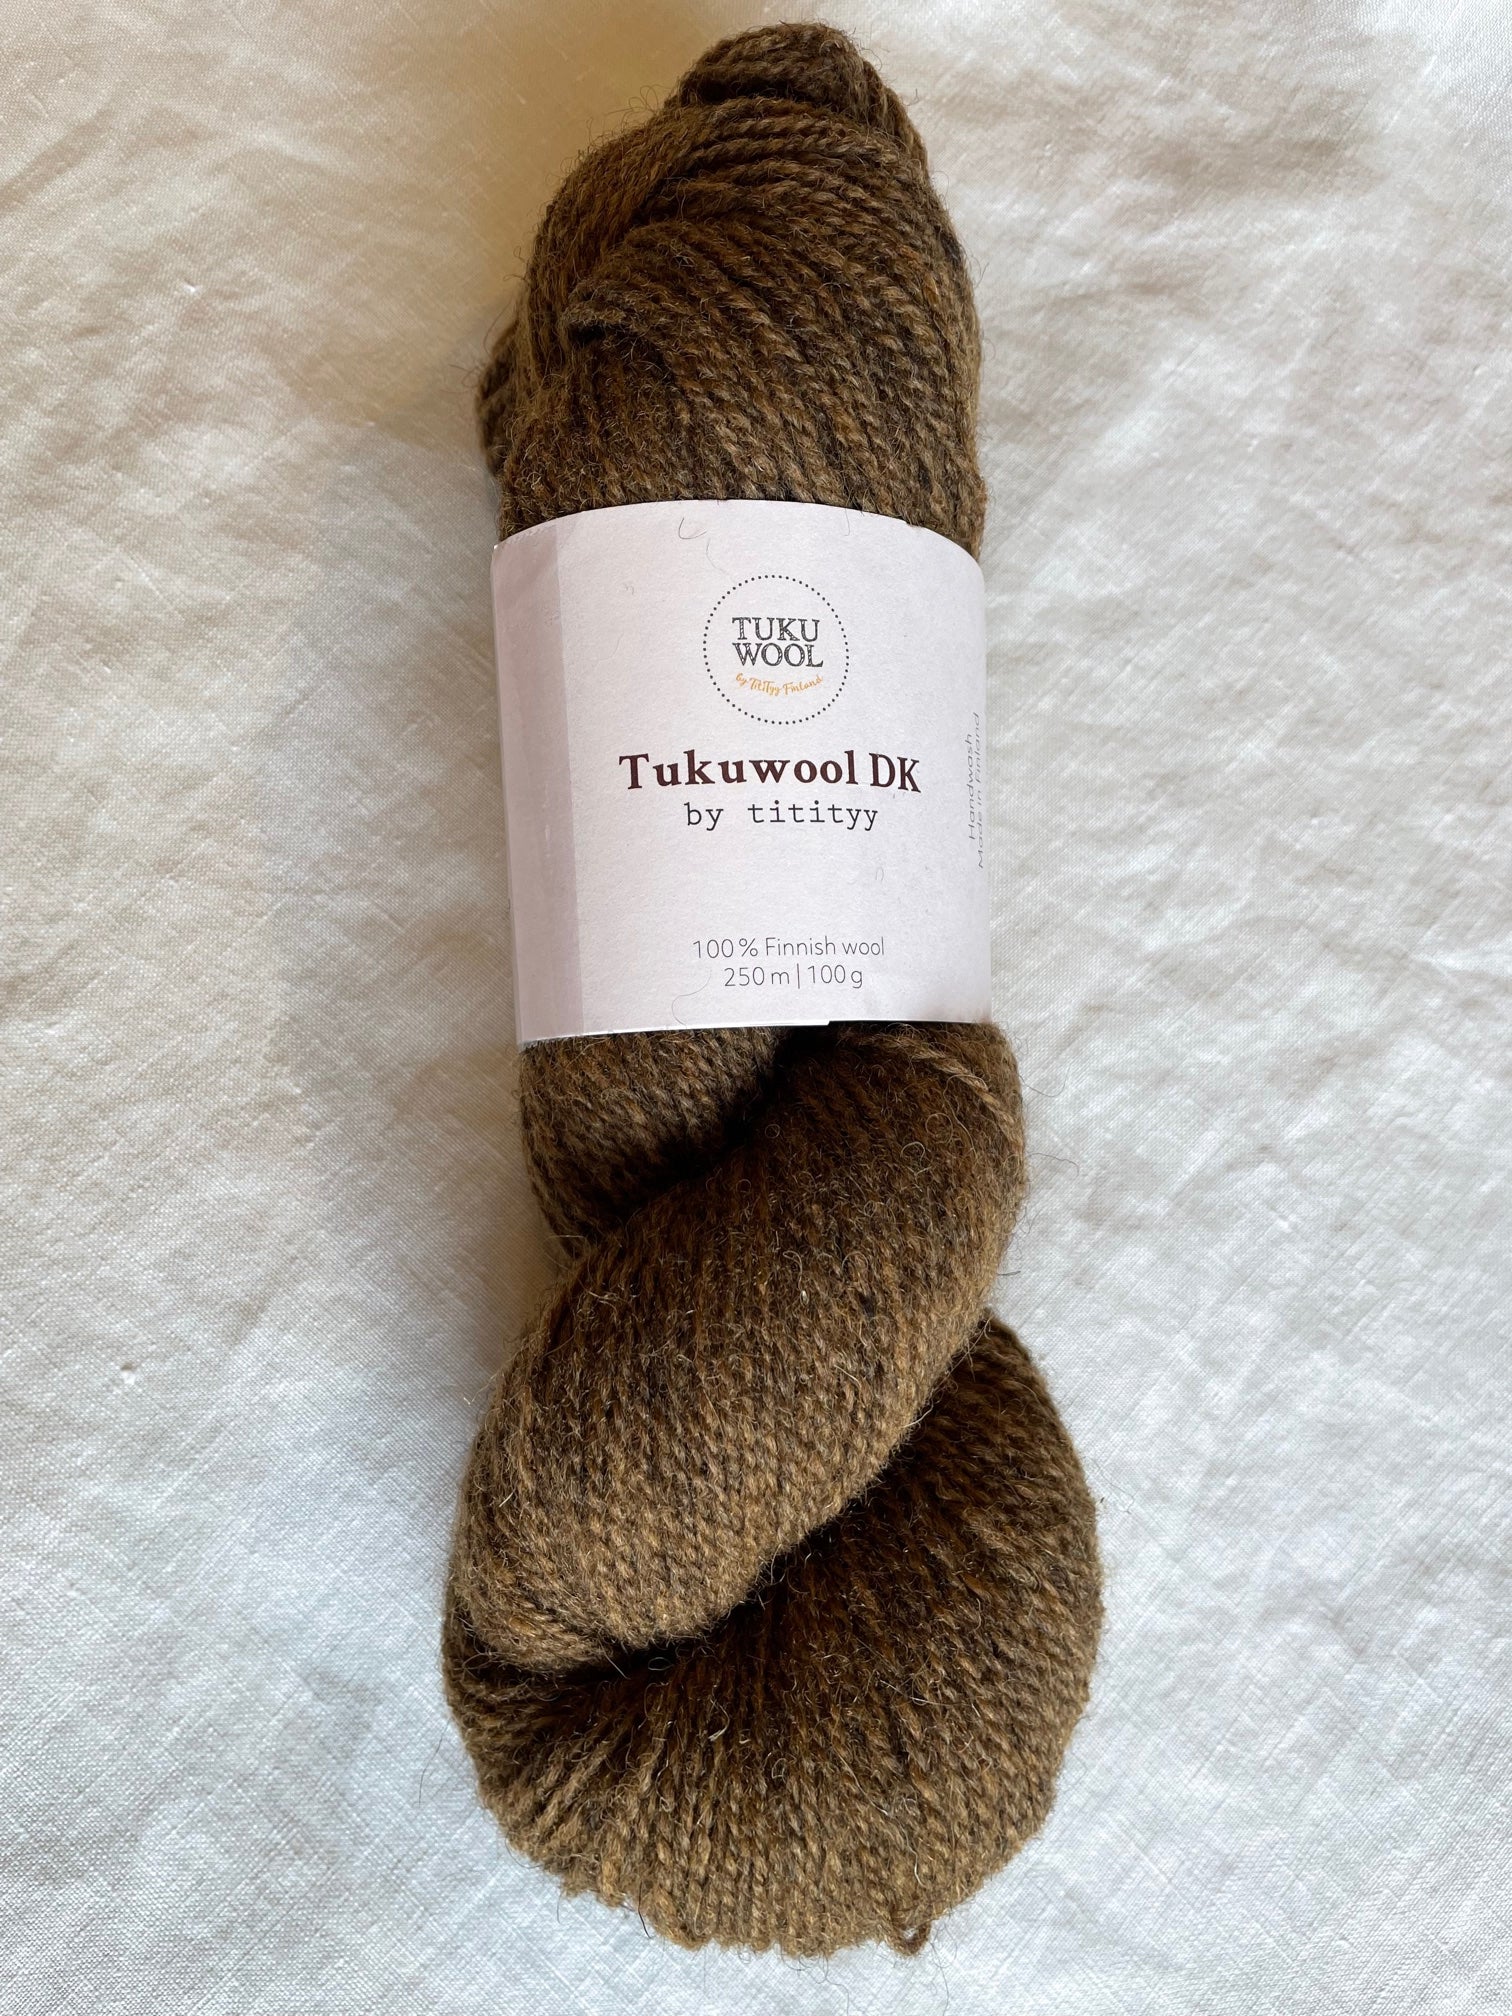 Tukuwool DK - Tukuwool - Yarn - Knotty Lamb